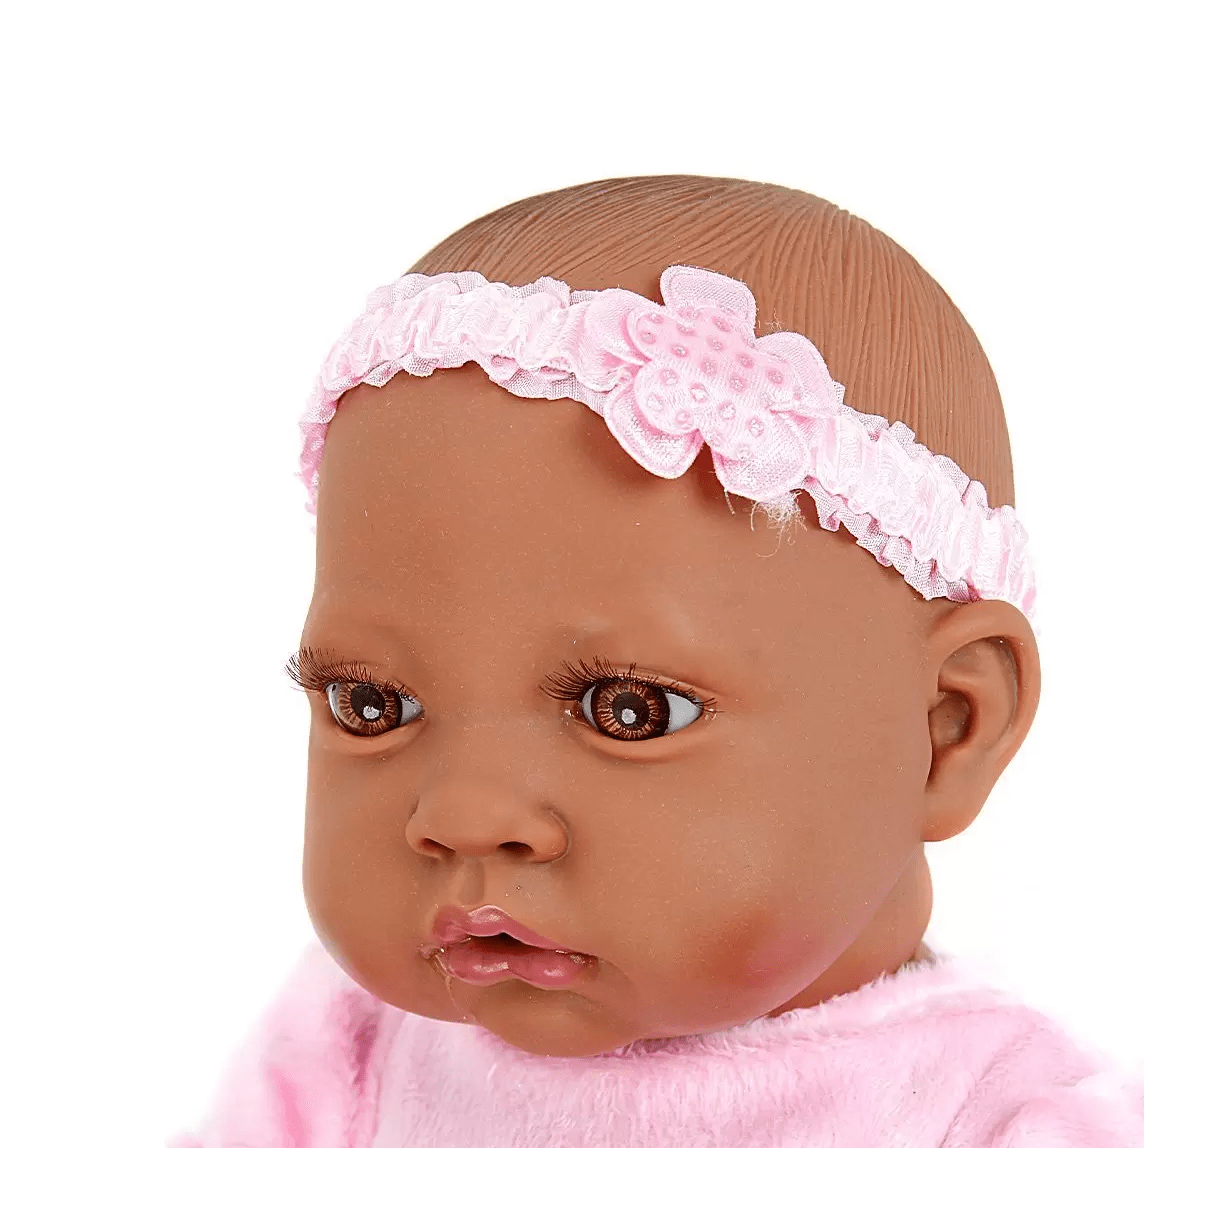 Boneca Bebê Reborn Miya Roupinha Azul Cotiplás - Fátima Criança